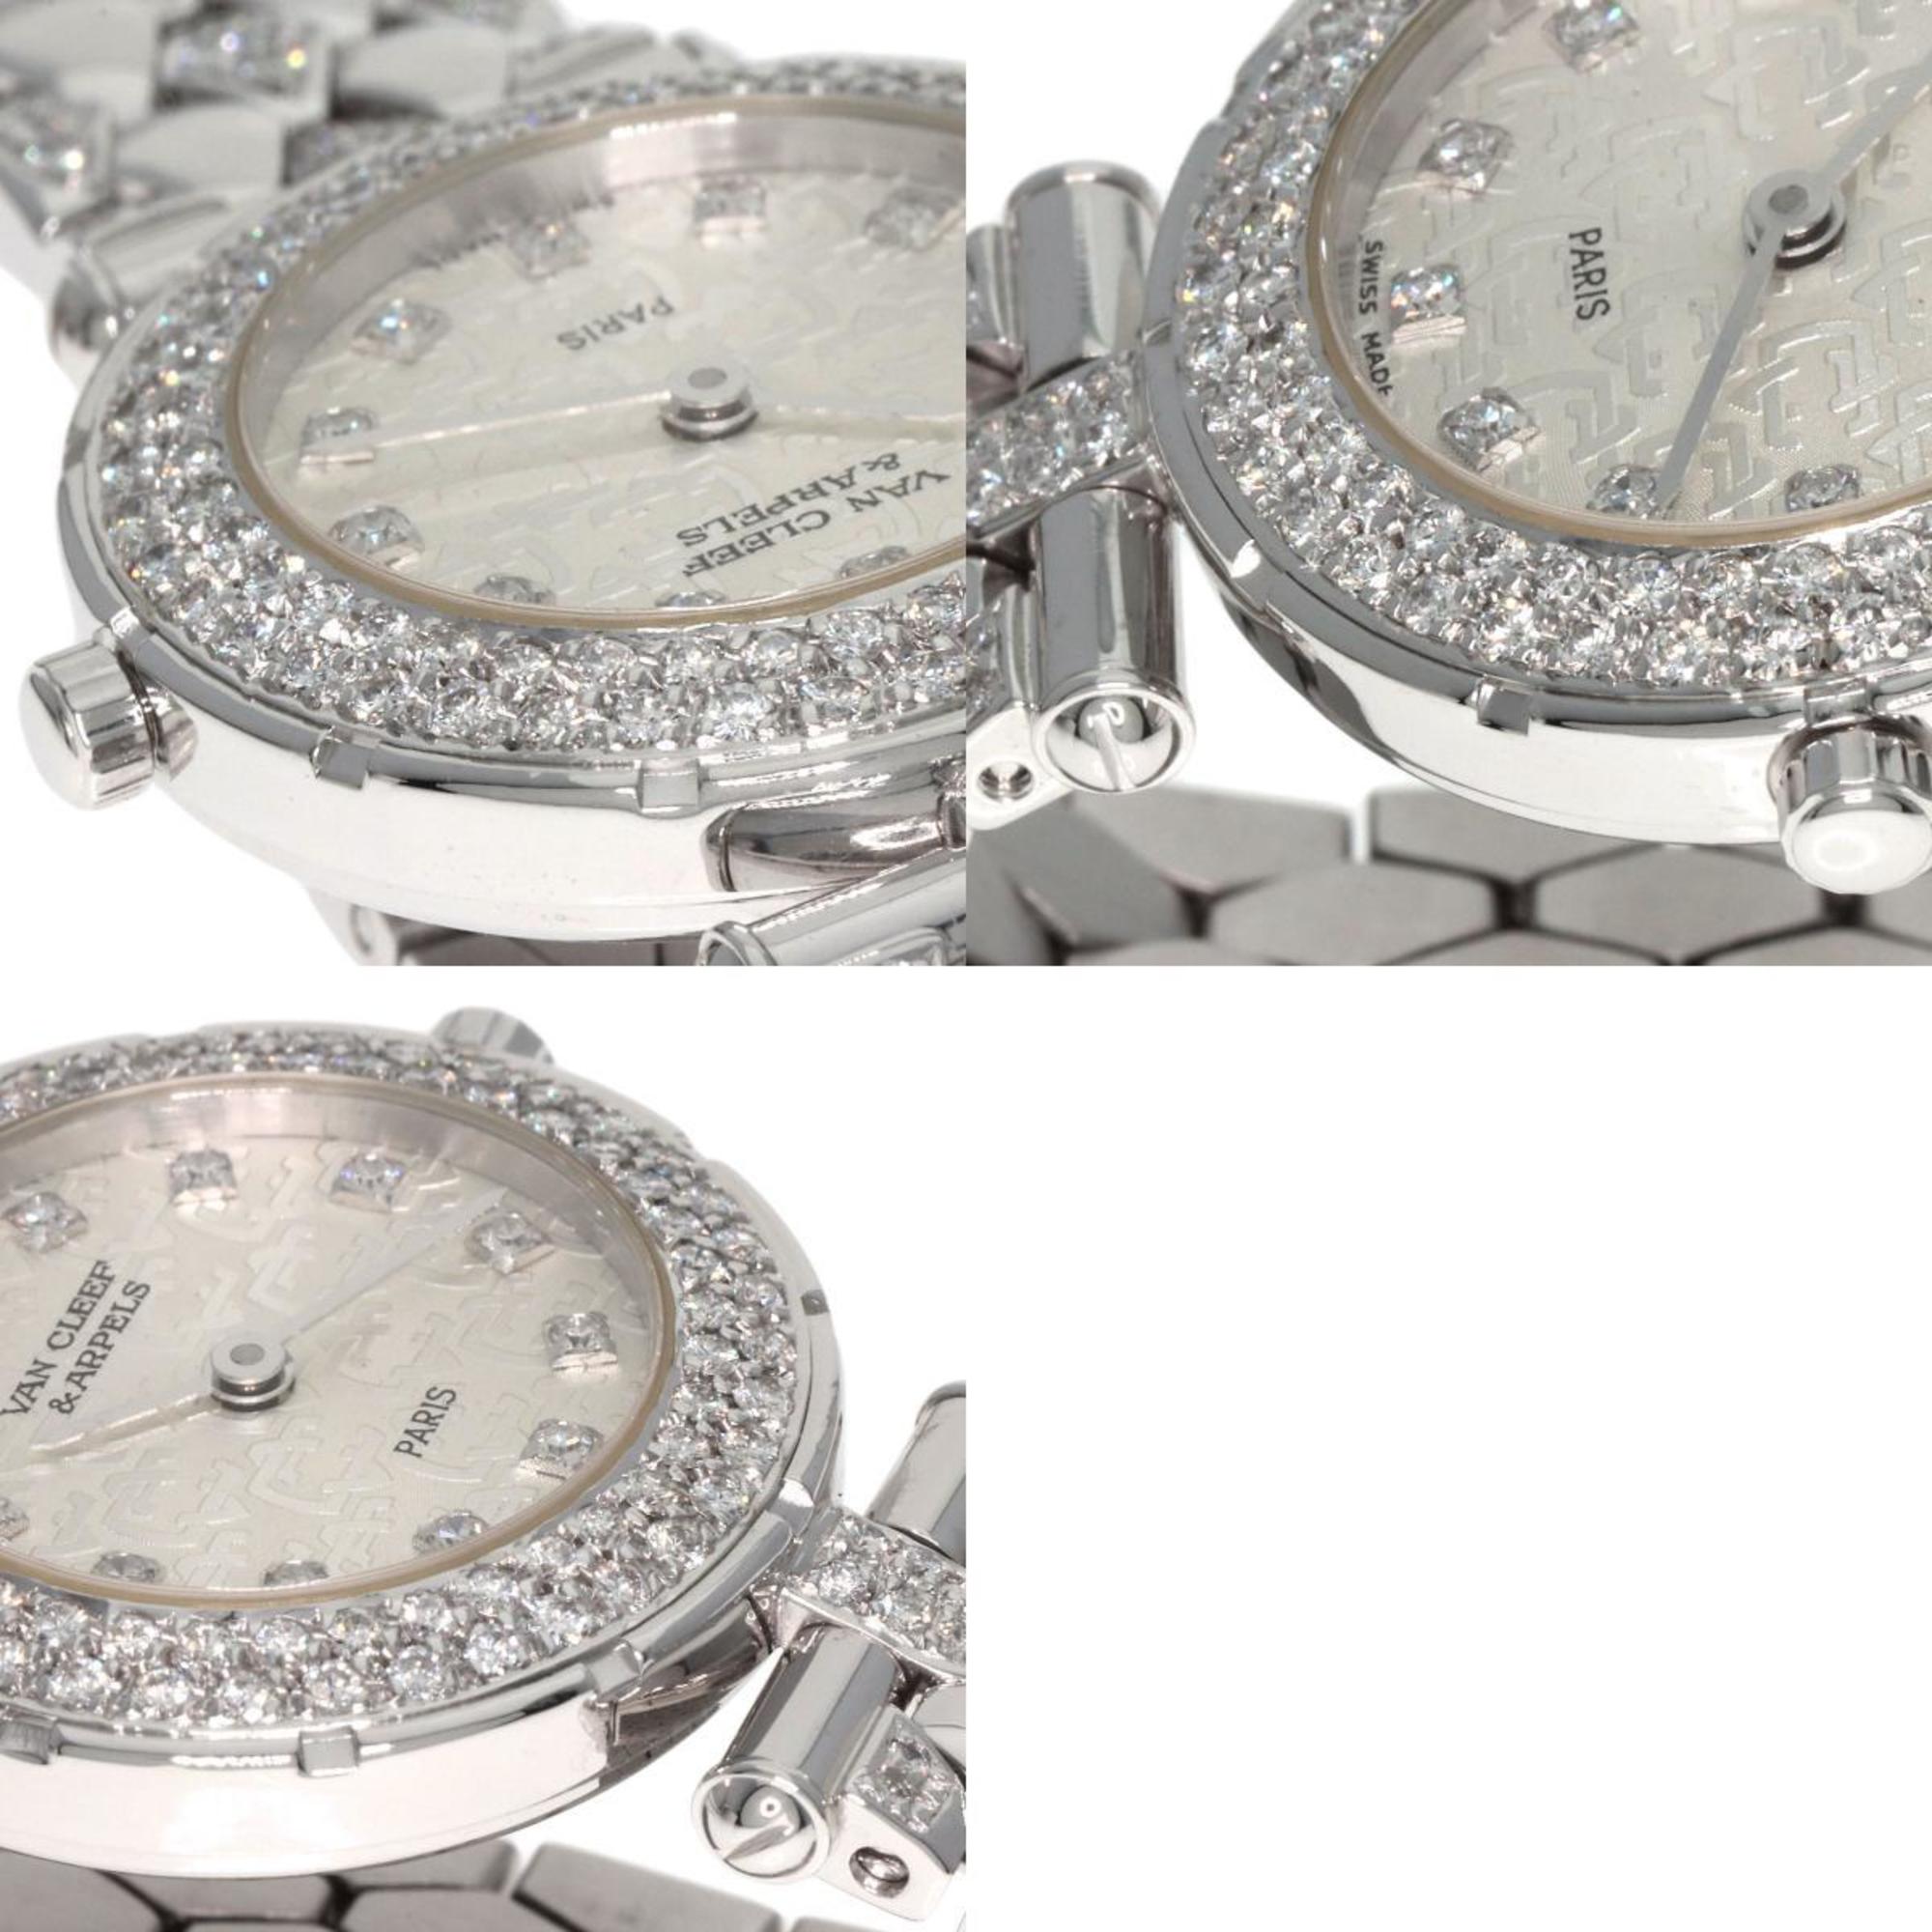 Van Cleef & Arpels Sport 2 Diamond Watch, K18 White Gold/K18WG/Diamond, Women's,